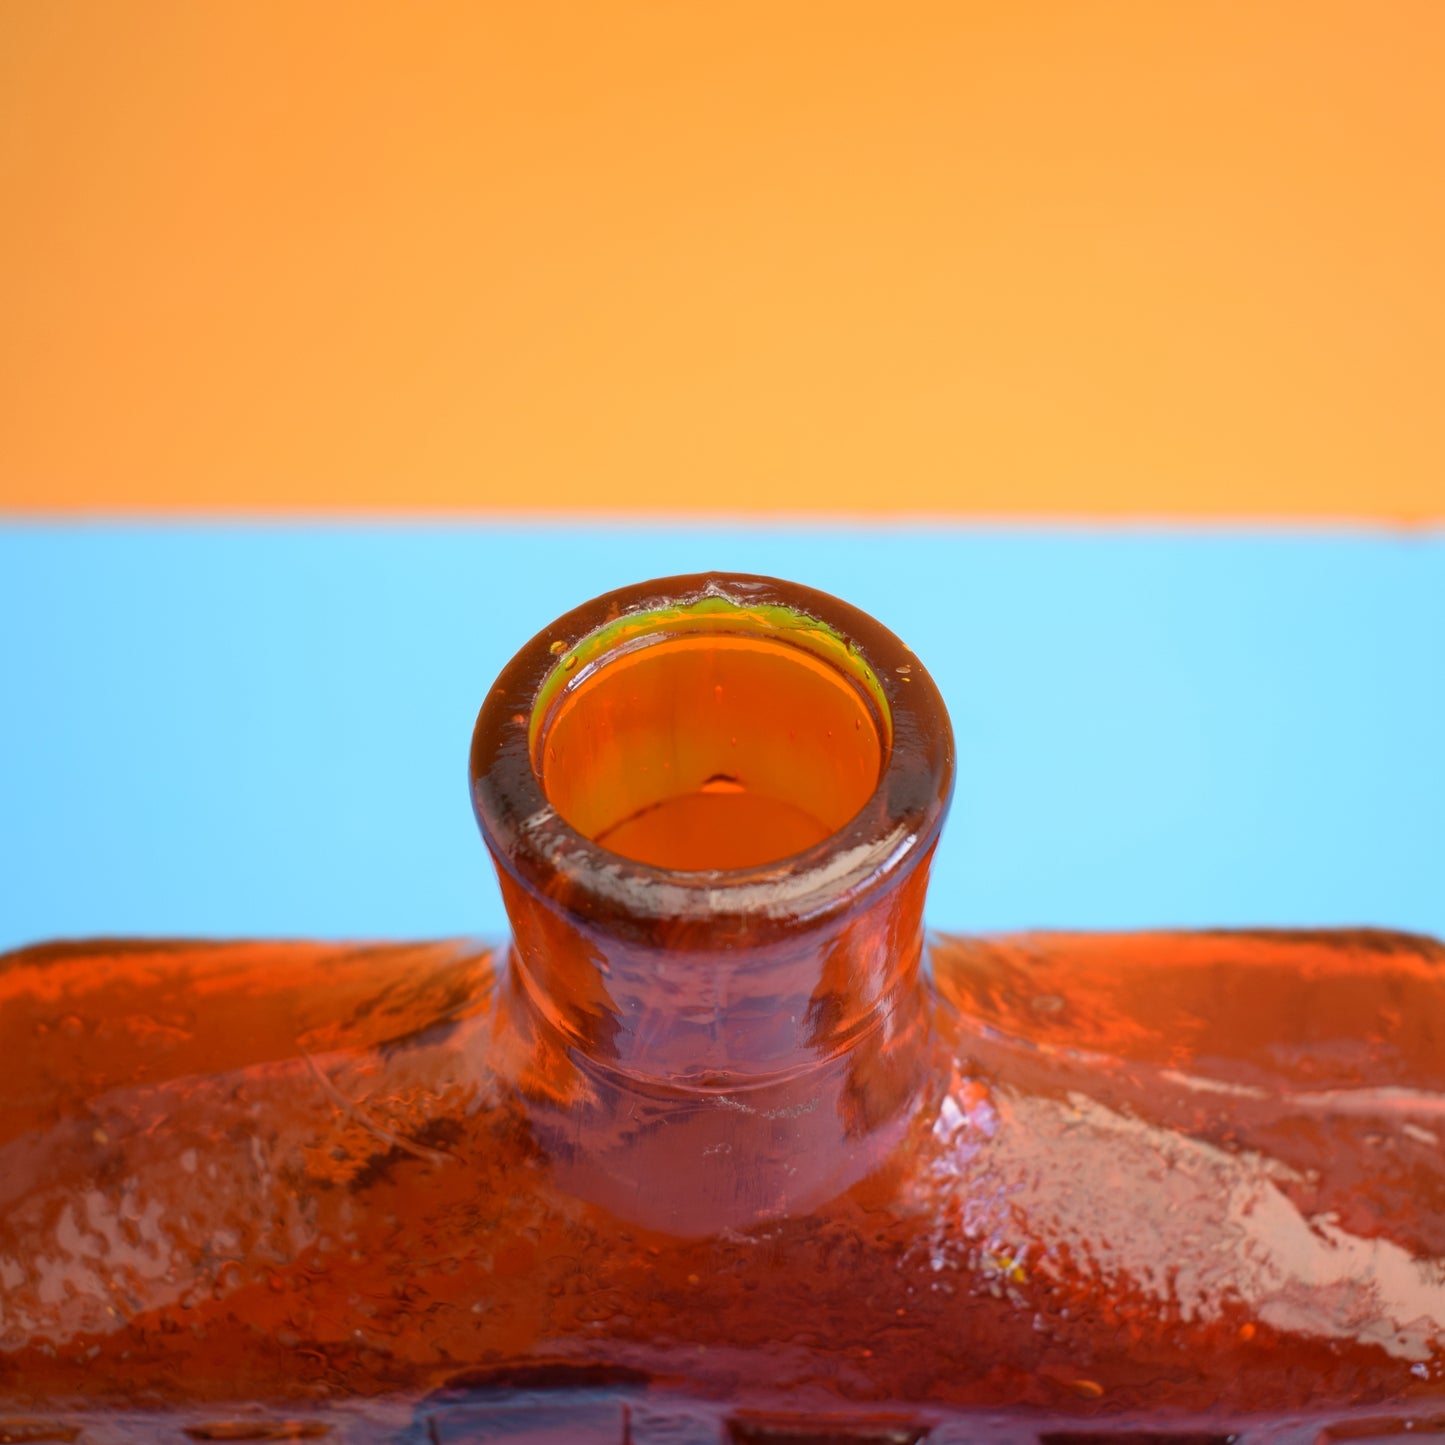 Vintage 1960s Italian Glass Square Genie Bottle - Orange